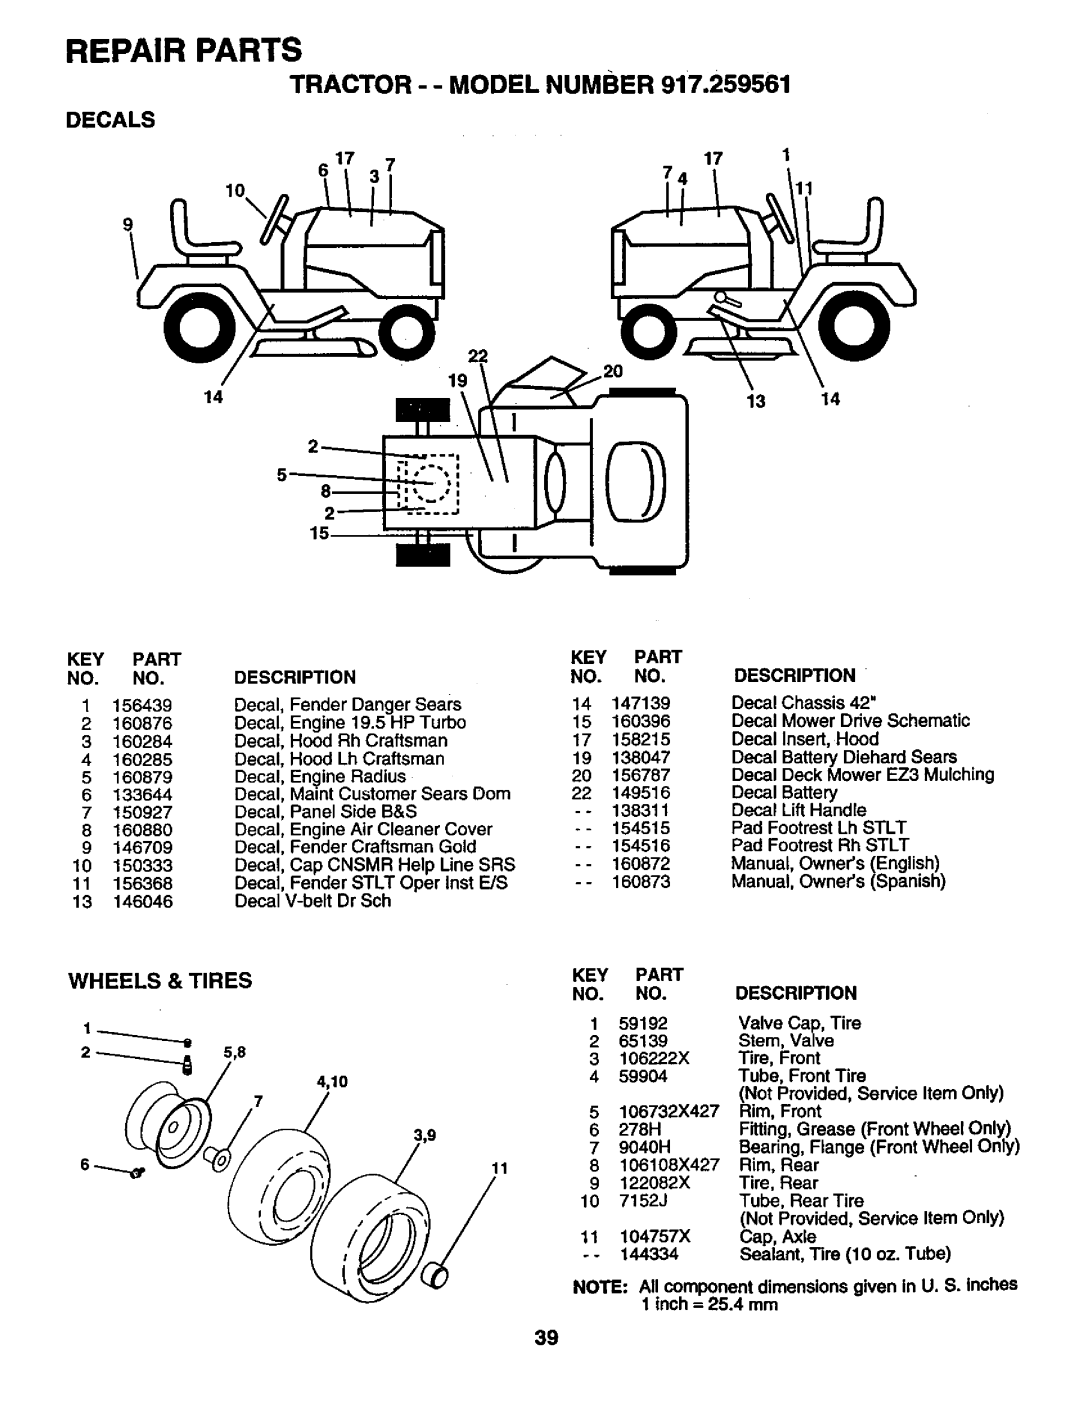 Craftsman 917.259561 owner manual Repair Parts, Tractor - - Model Number, Decals, Wheels & Tires 